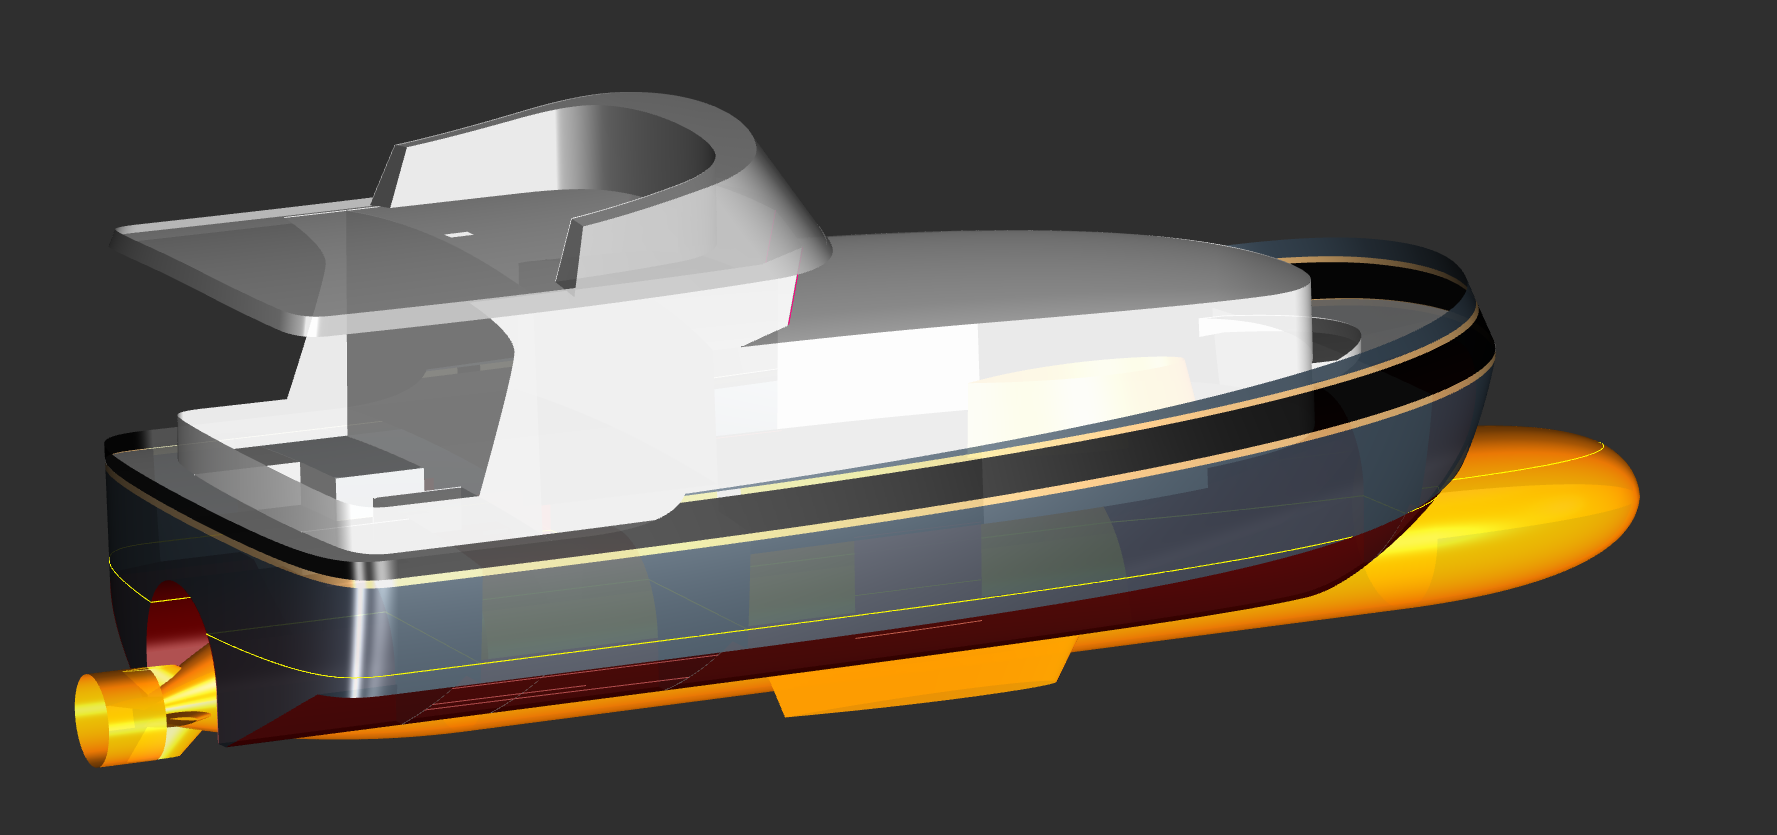 NEMO - A Submarine nested into a Power Cat...!  - Kasten Marine Design, Inc.